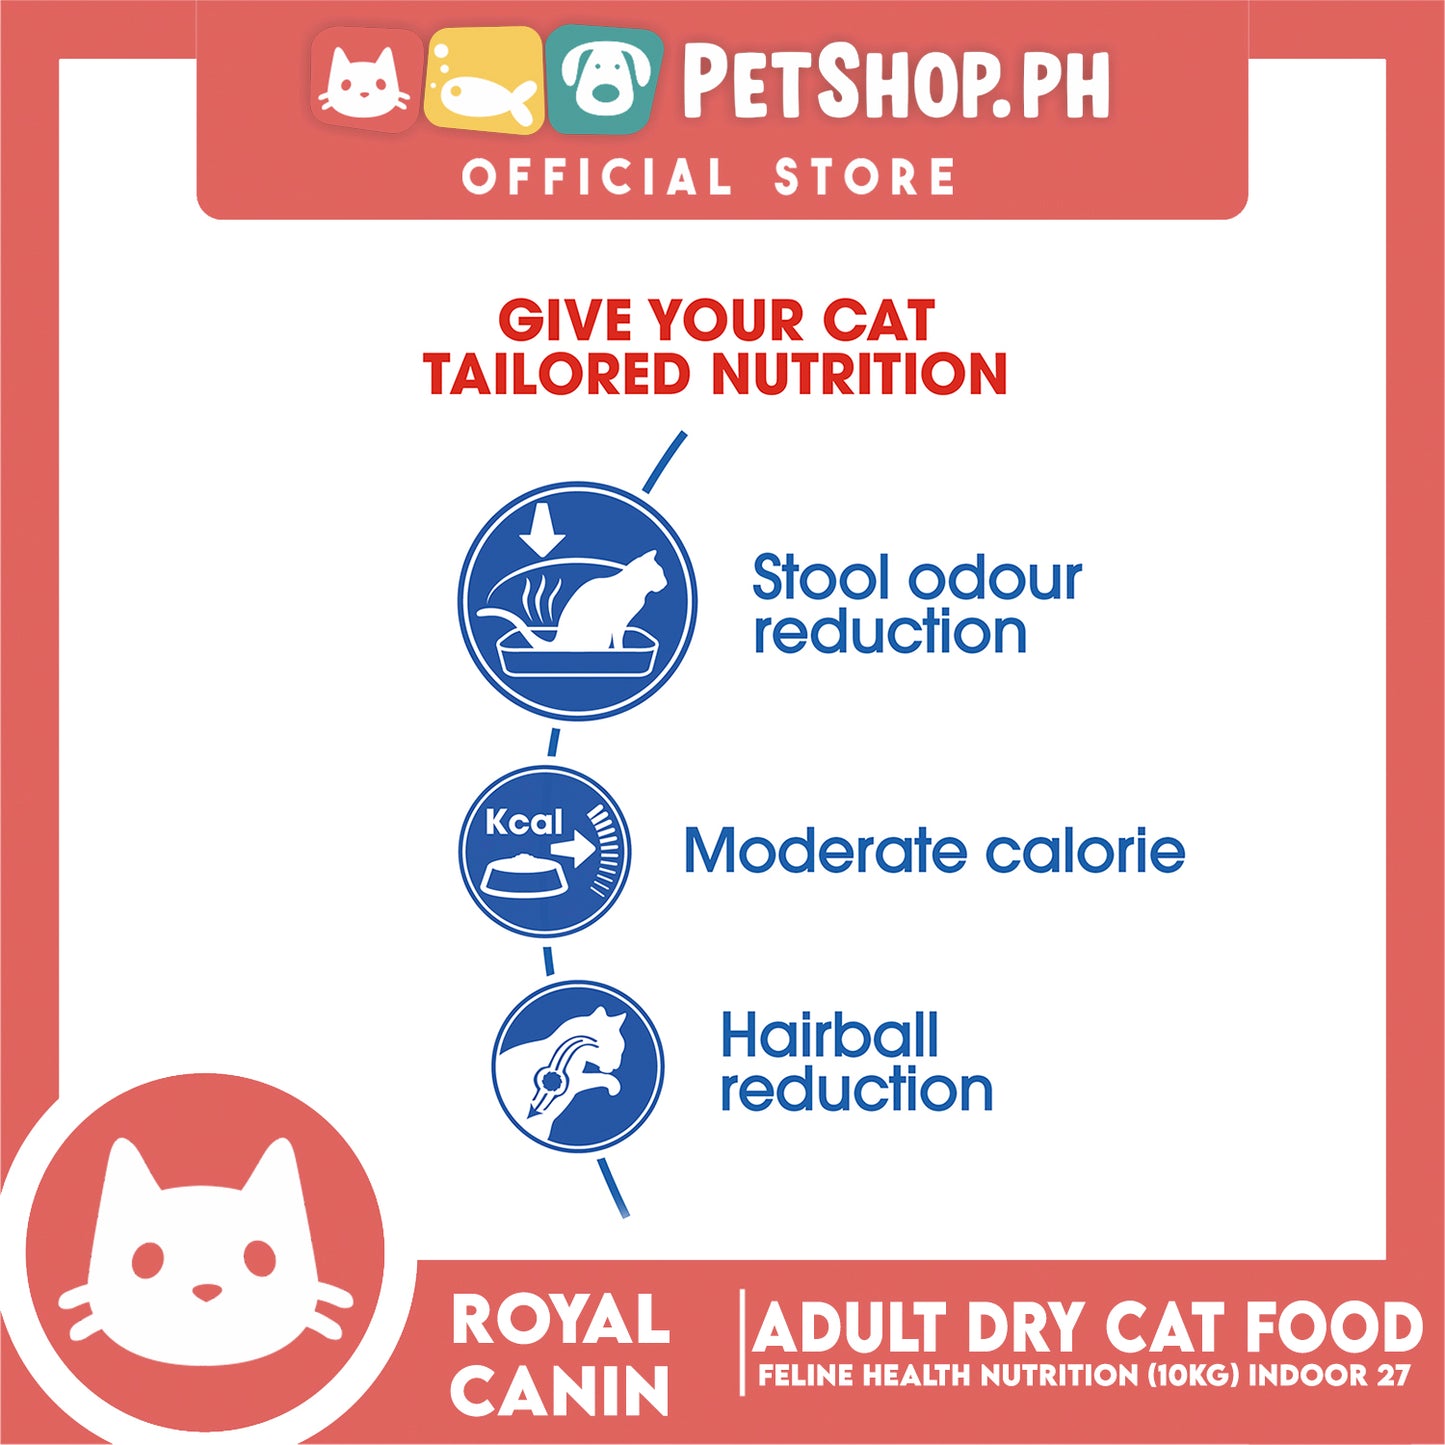 Royal Canin Indoor 27 (10kg) Adult Dry Cat Food - Feline Health Nutrition